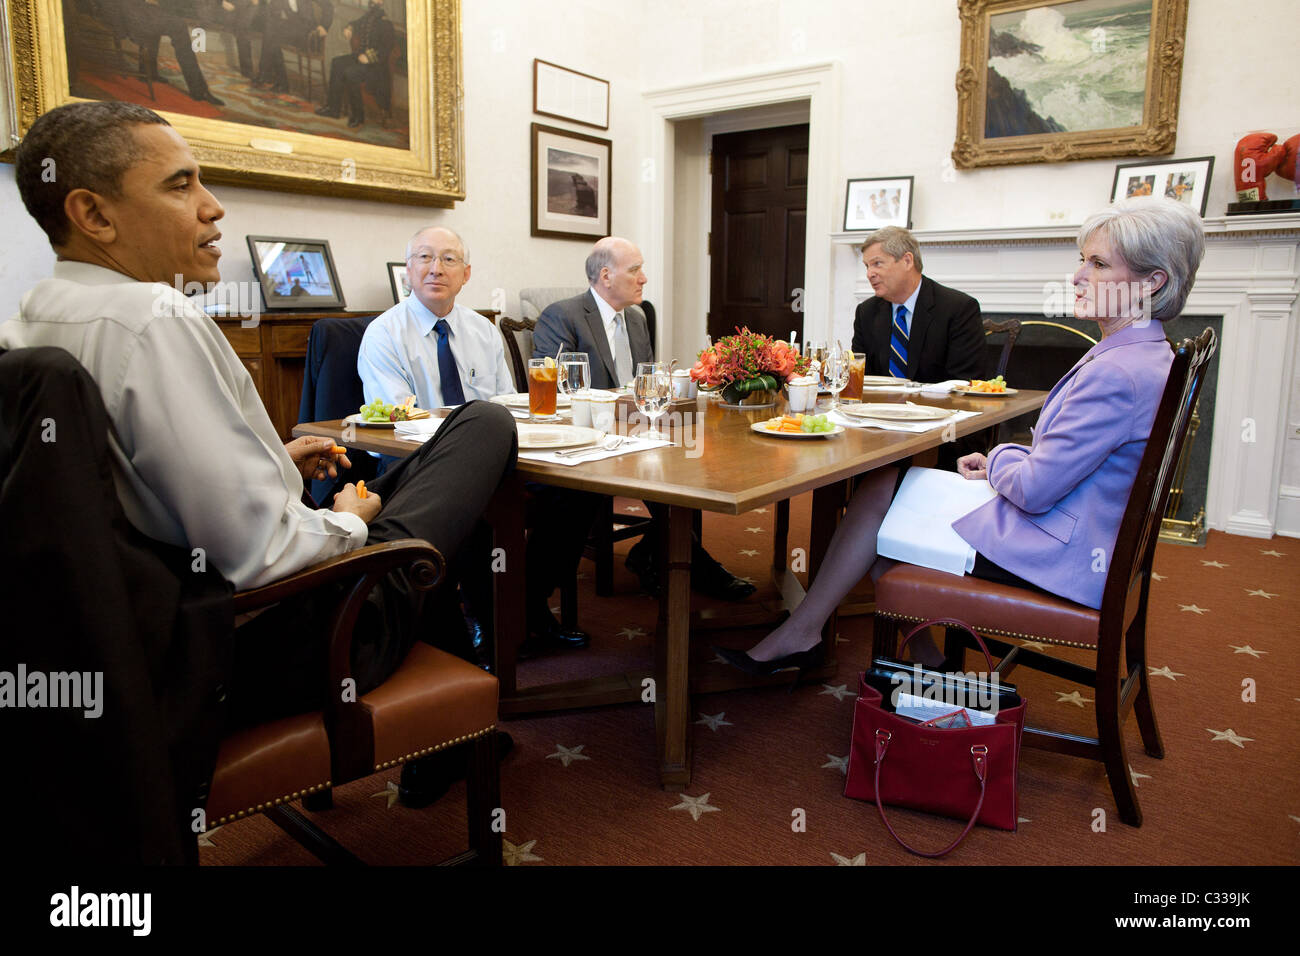 Präsident Barack Obama hat Mittagessen mit Schrank Sekretärinnen im Oval Office Private Dining Room, 10. März 2011. Stockfoto